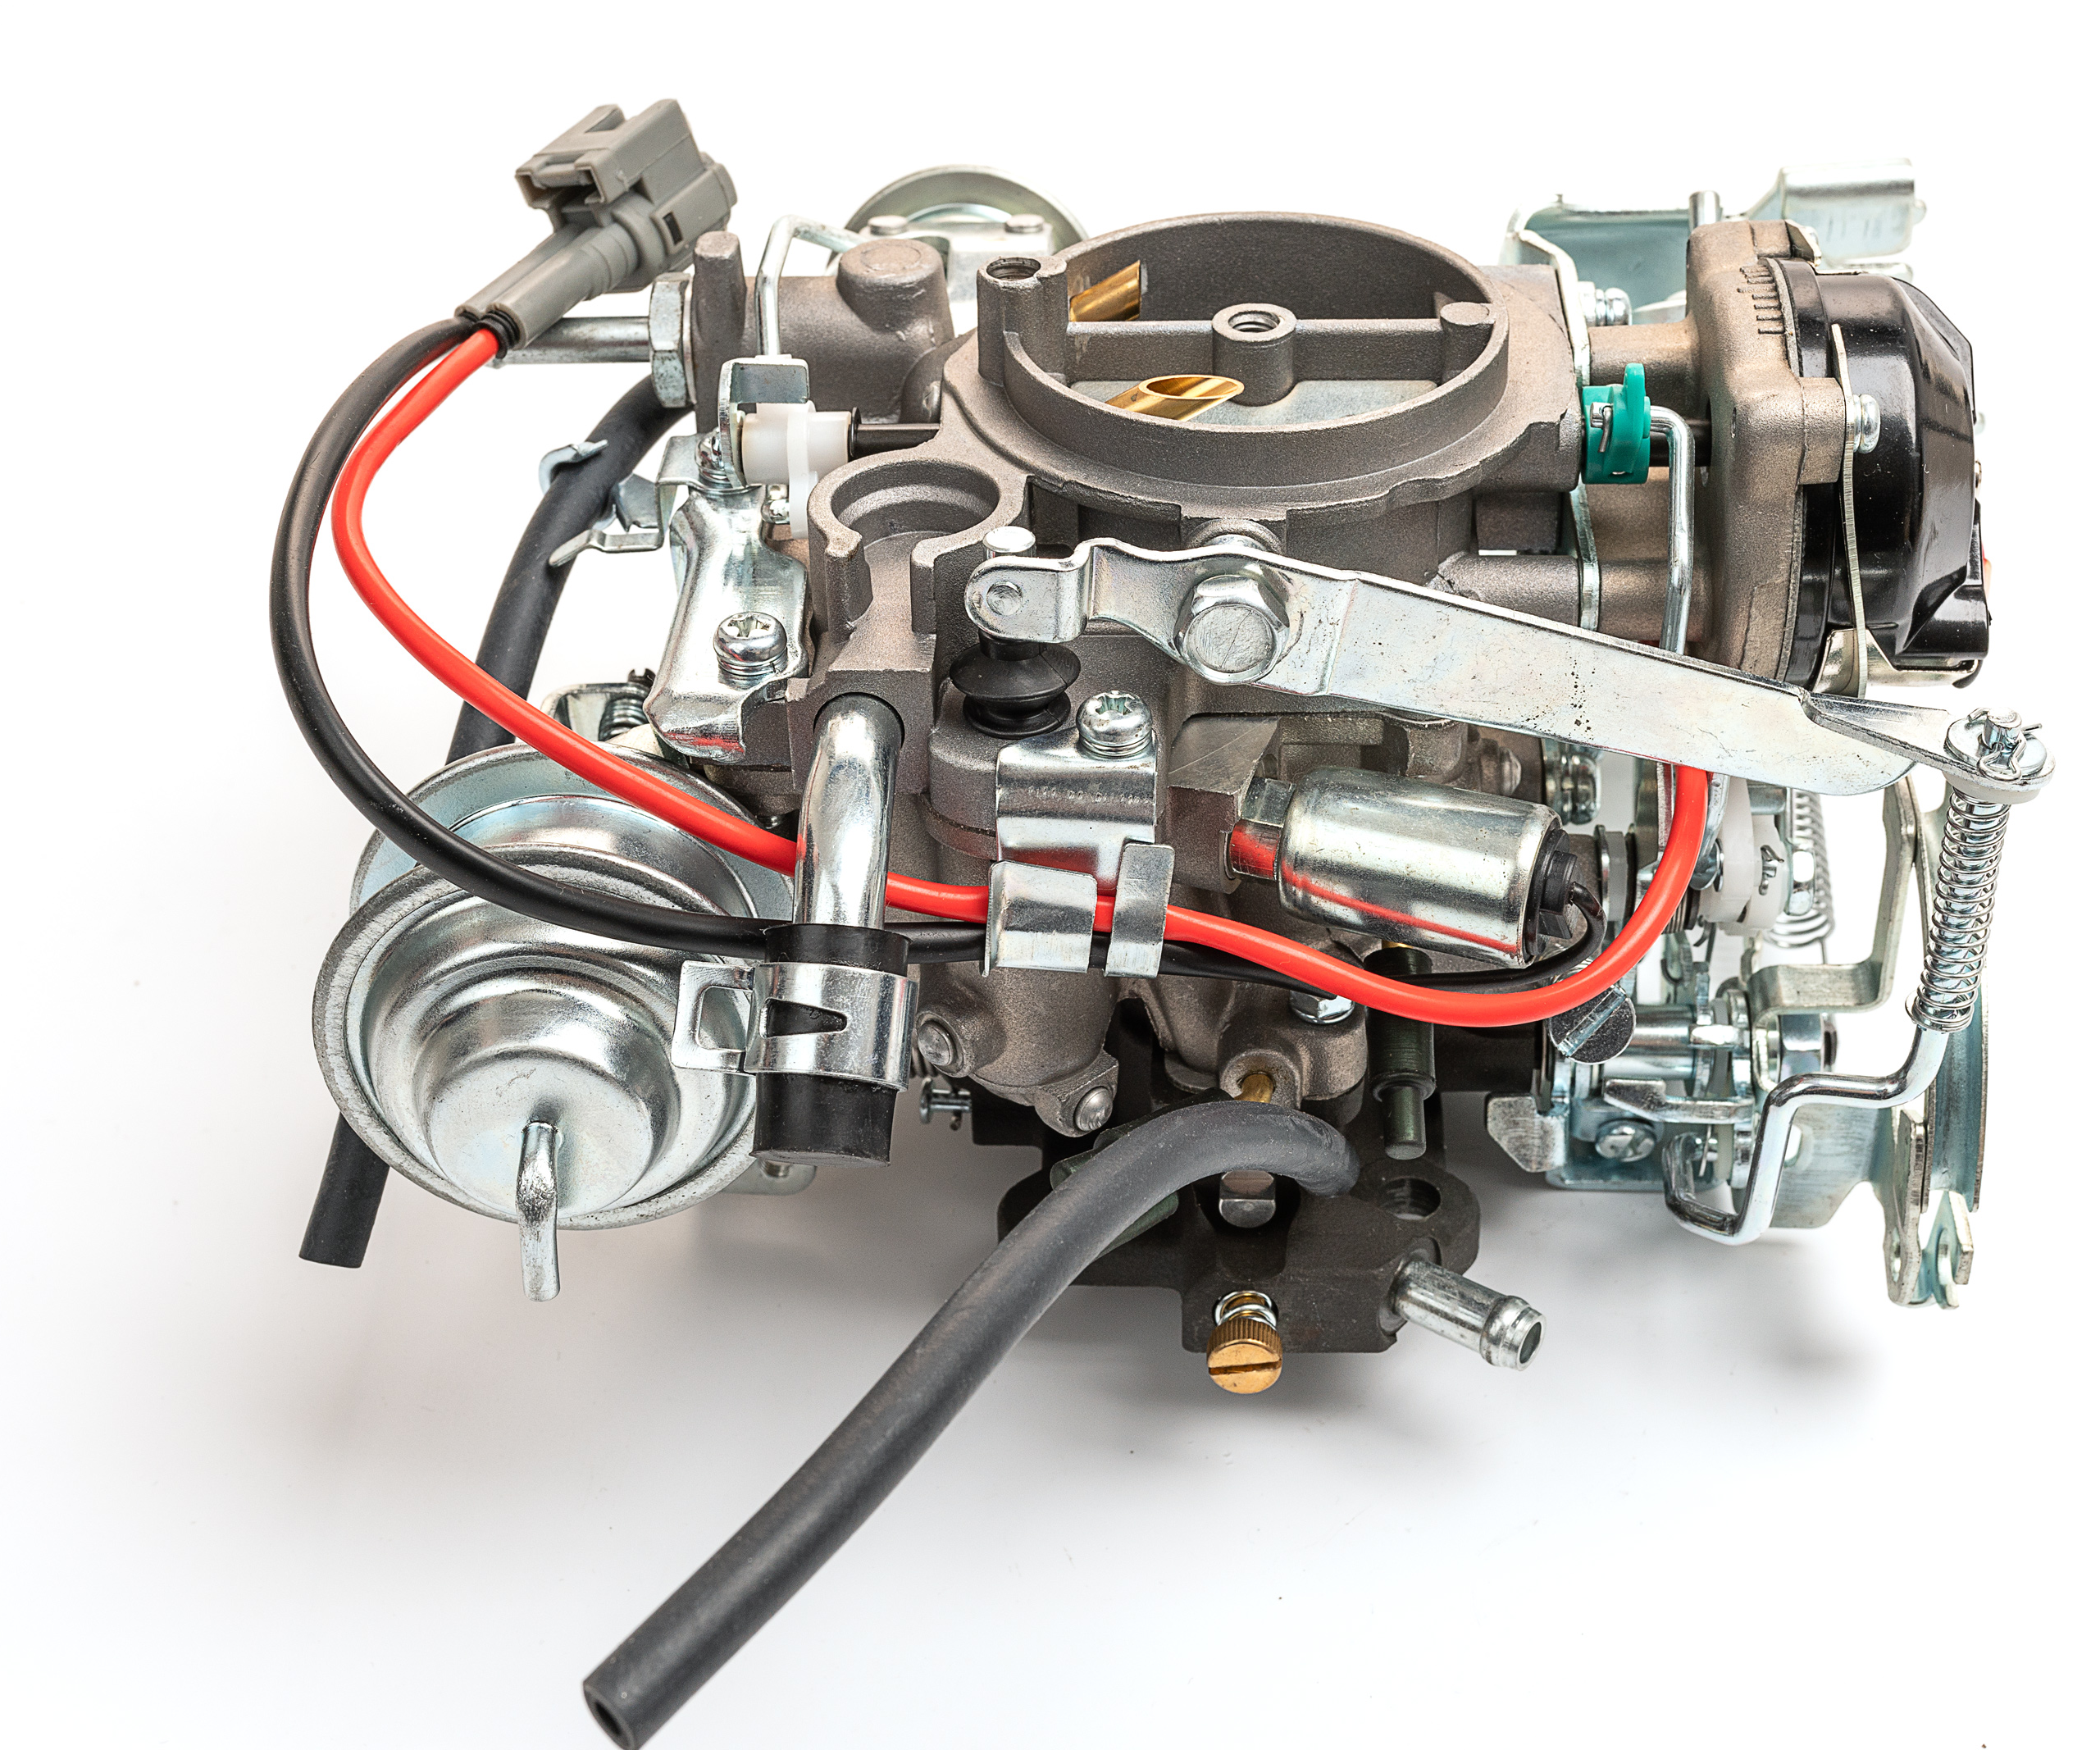 Carburetor for toyota | Carburetor damage symptoms and treatment methods